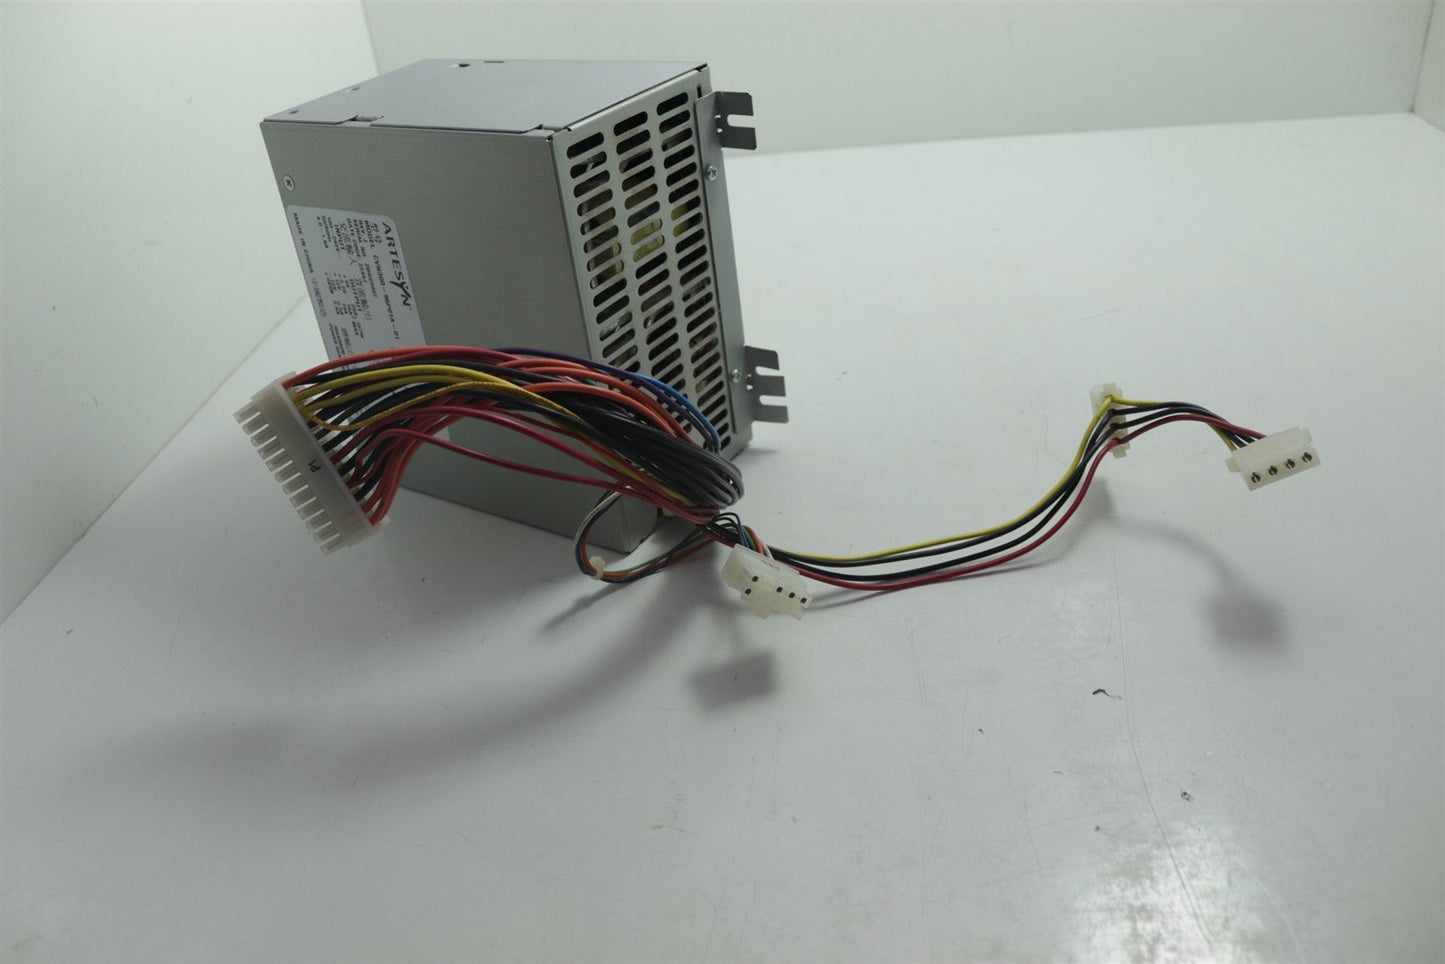 Tektronix TDS5104B Artesyn Power Supply CVN300-96P01A-01 167W Max Output Tested